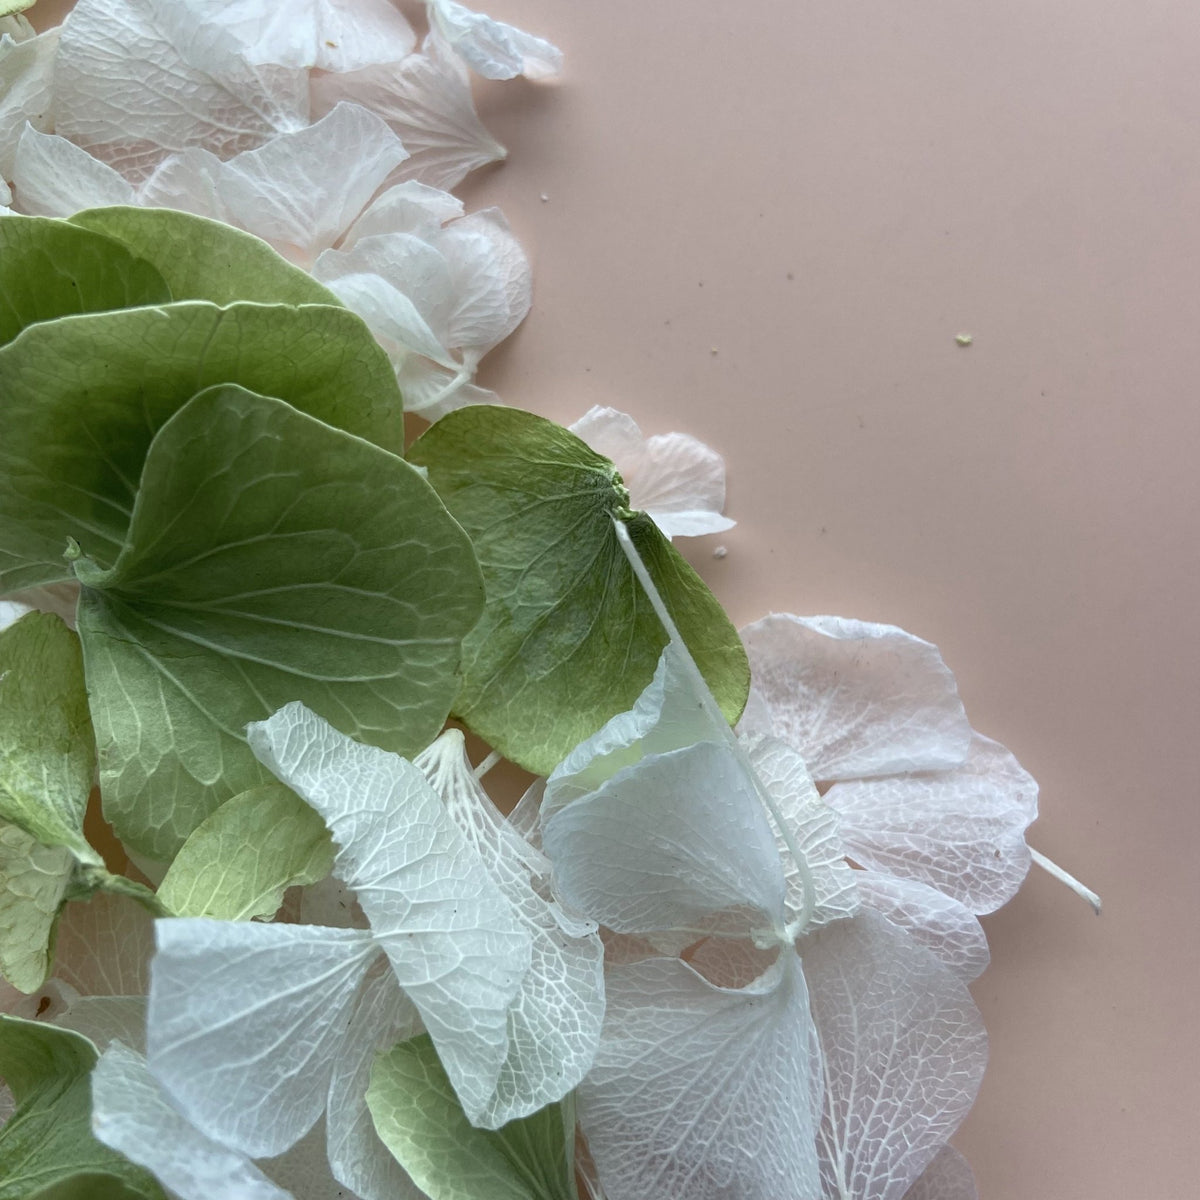 How much confetti do I need for my wedding? Biodegradable Wedding Confetti, Eco-friendly Flower Petal Confetti